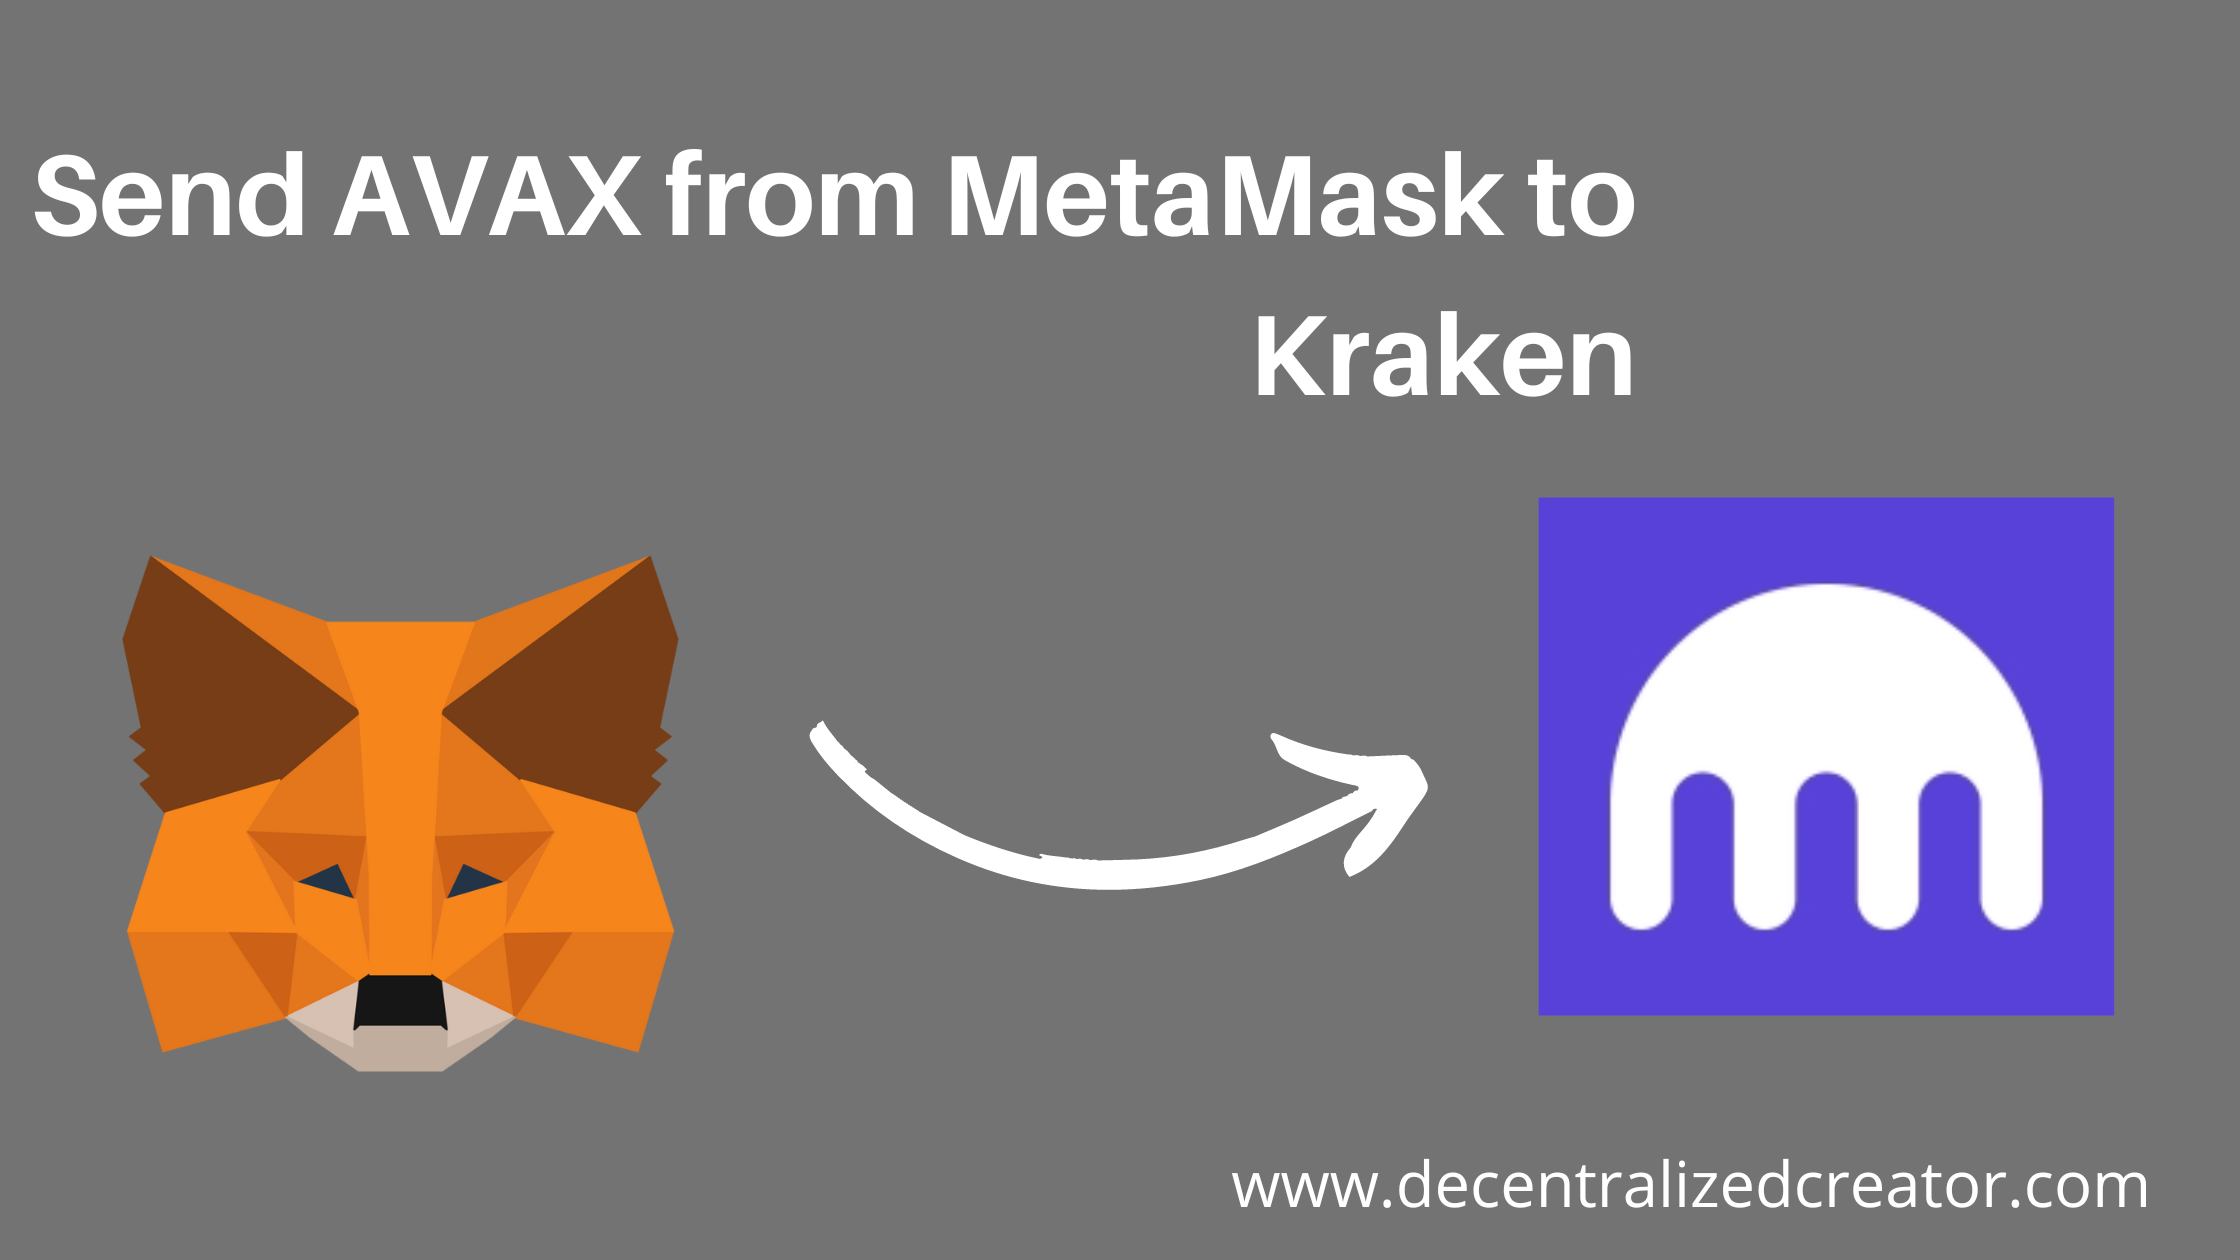 Send AVAX from MetaMask to Kraken